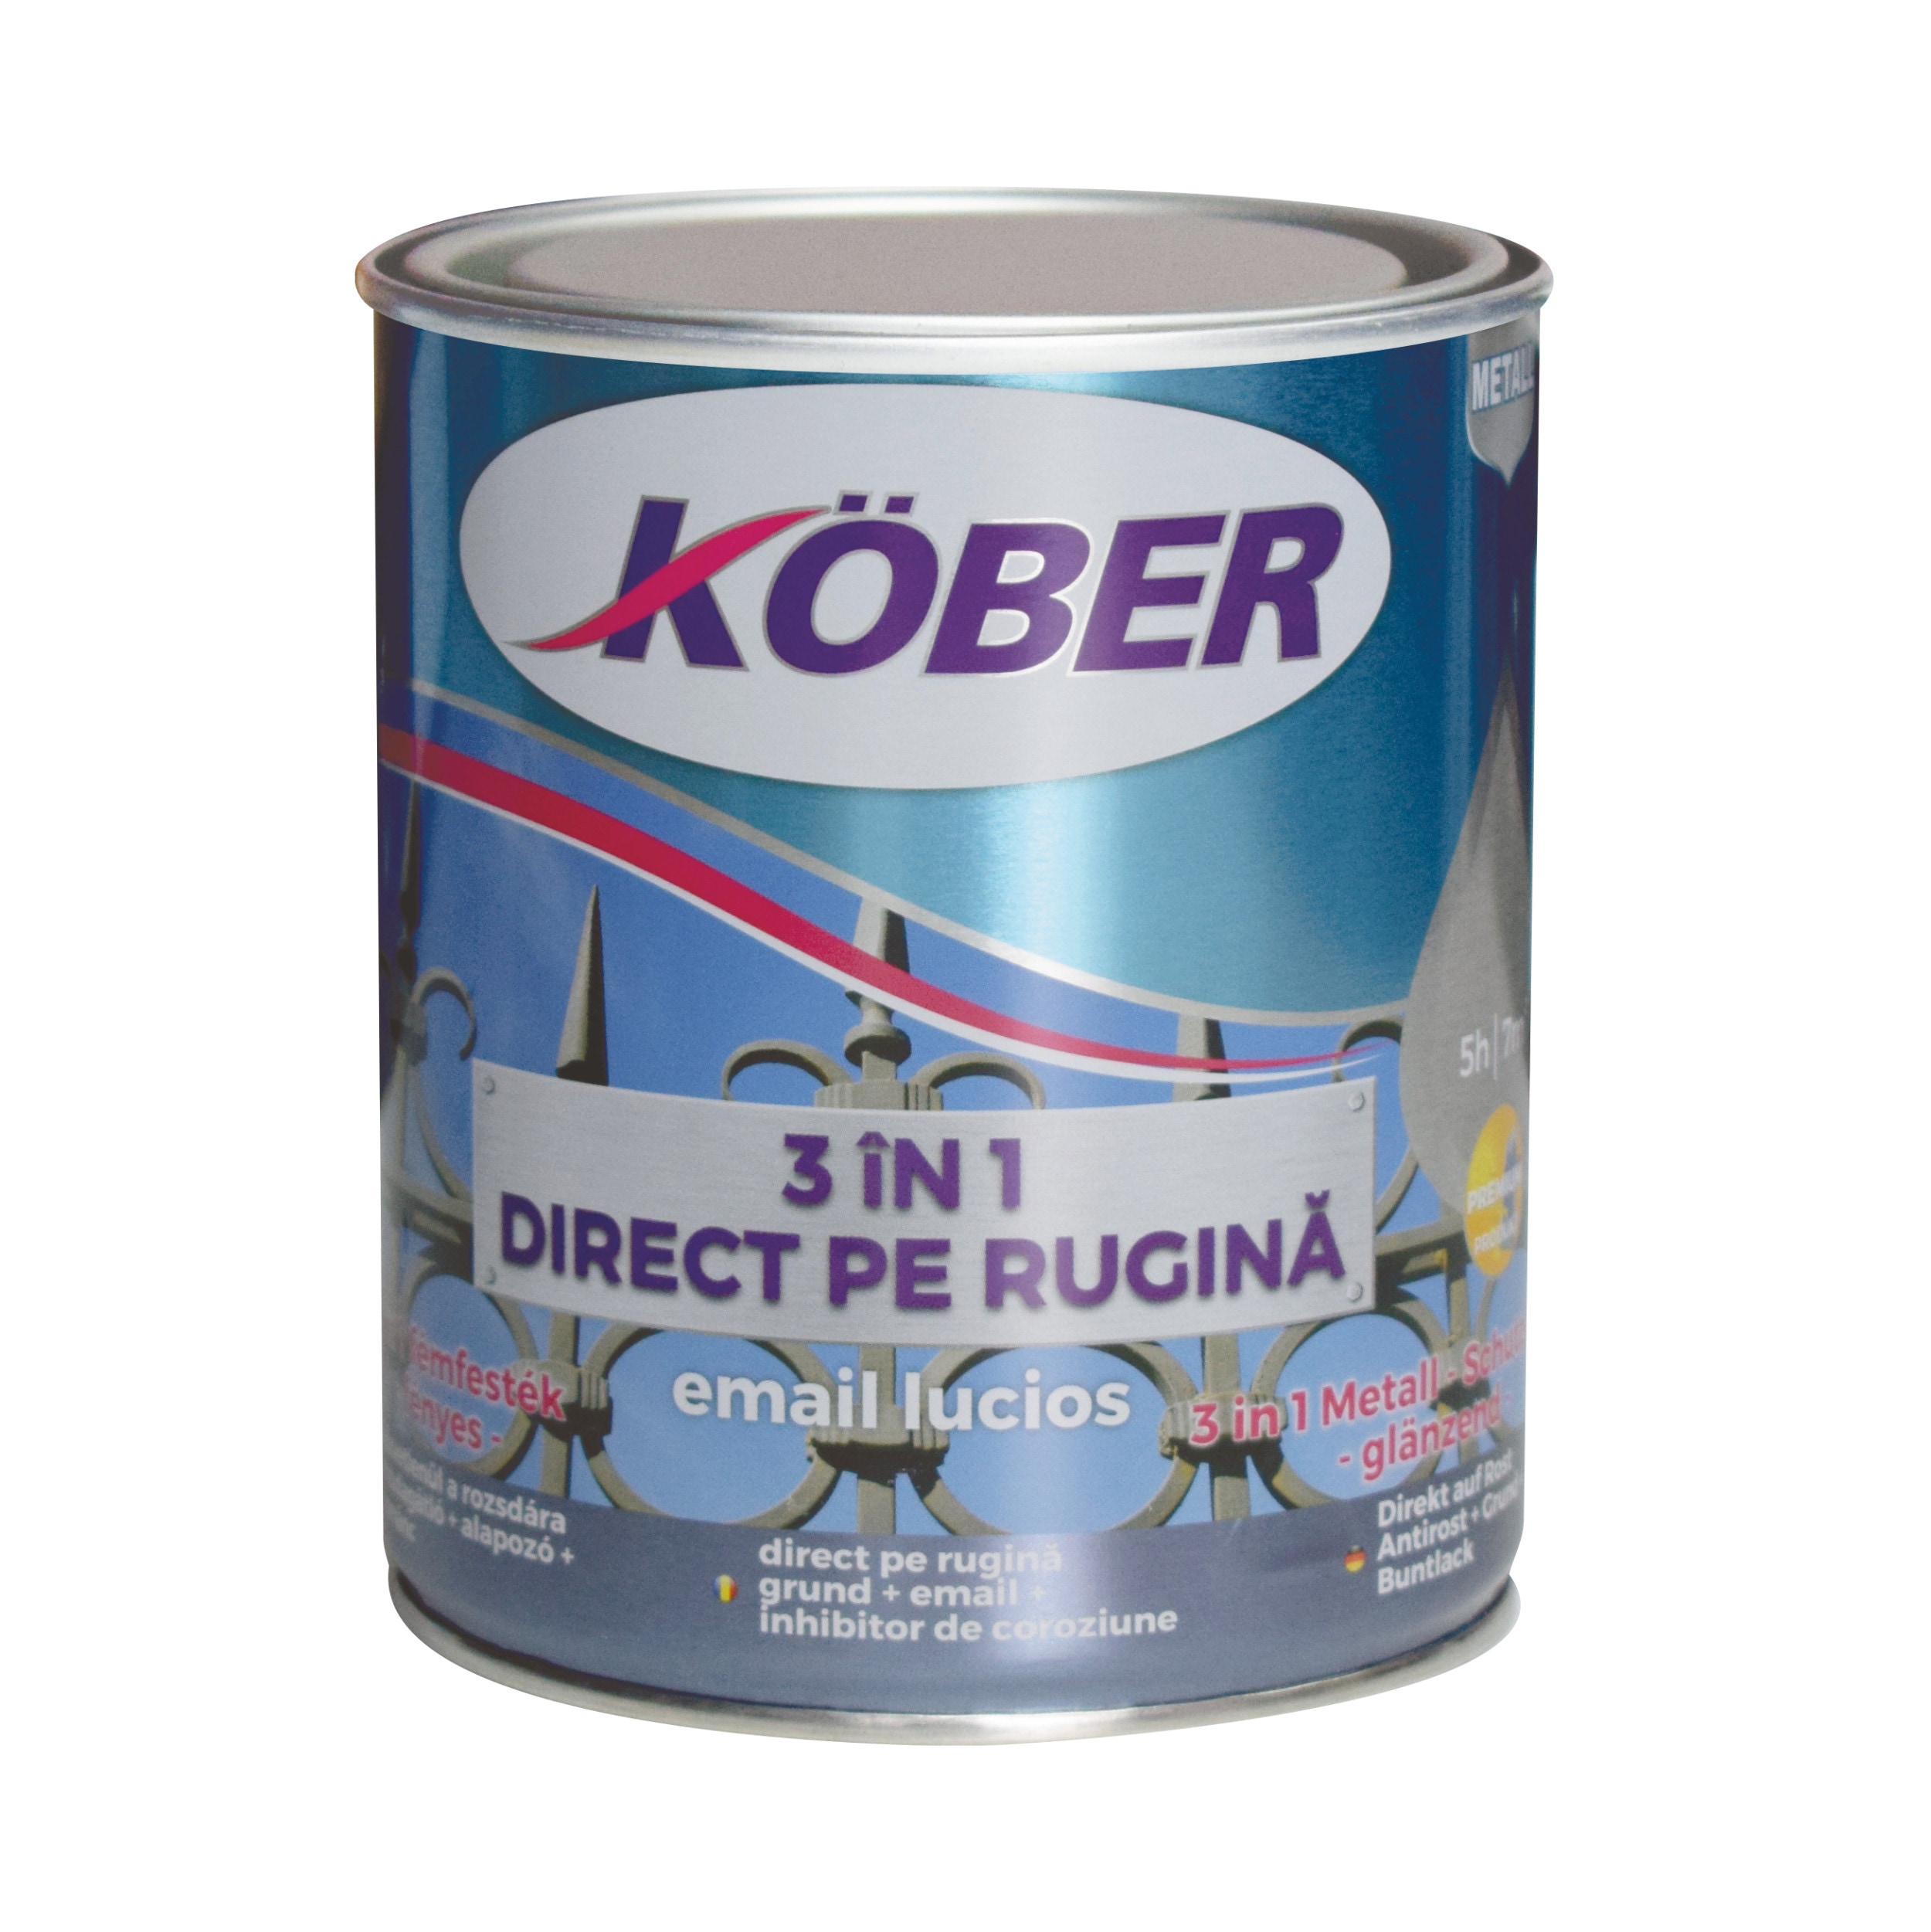 Vopsea alchidica pentru metal Kober 3 in 1, interior / exterior, argintiu, 0.75 L